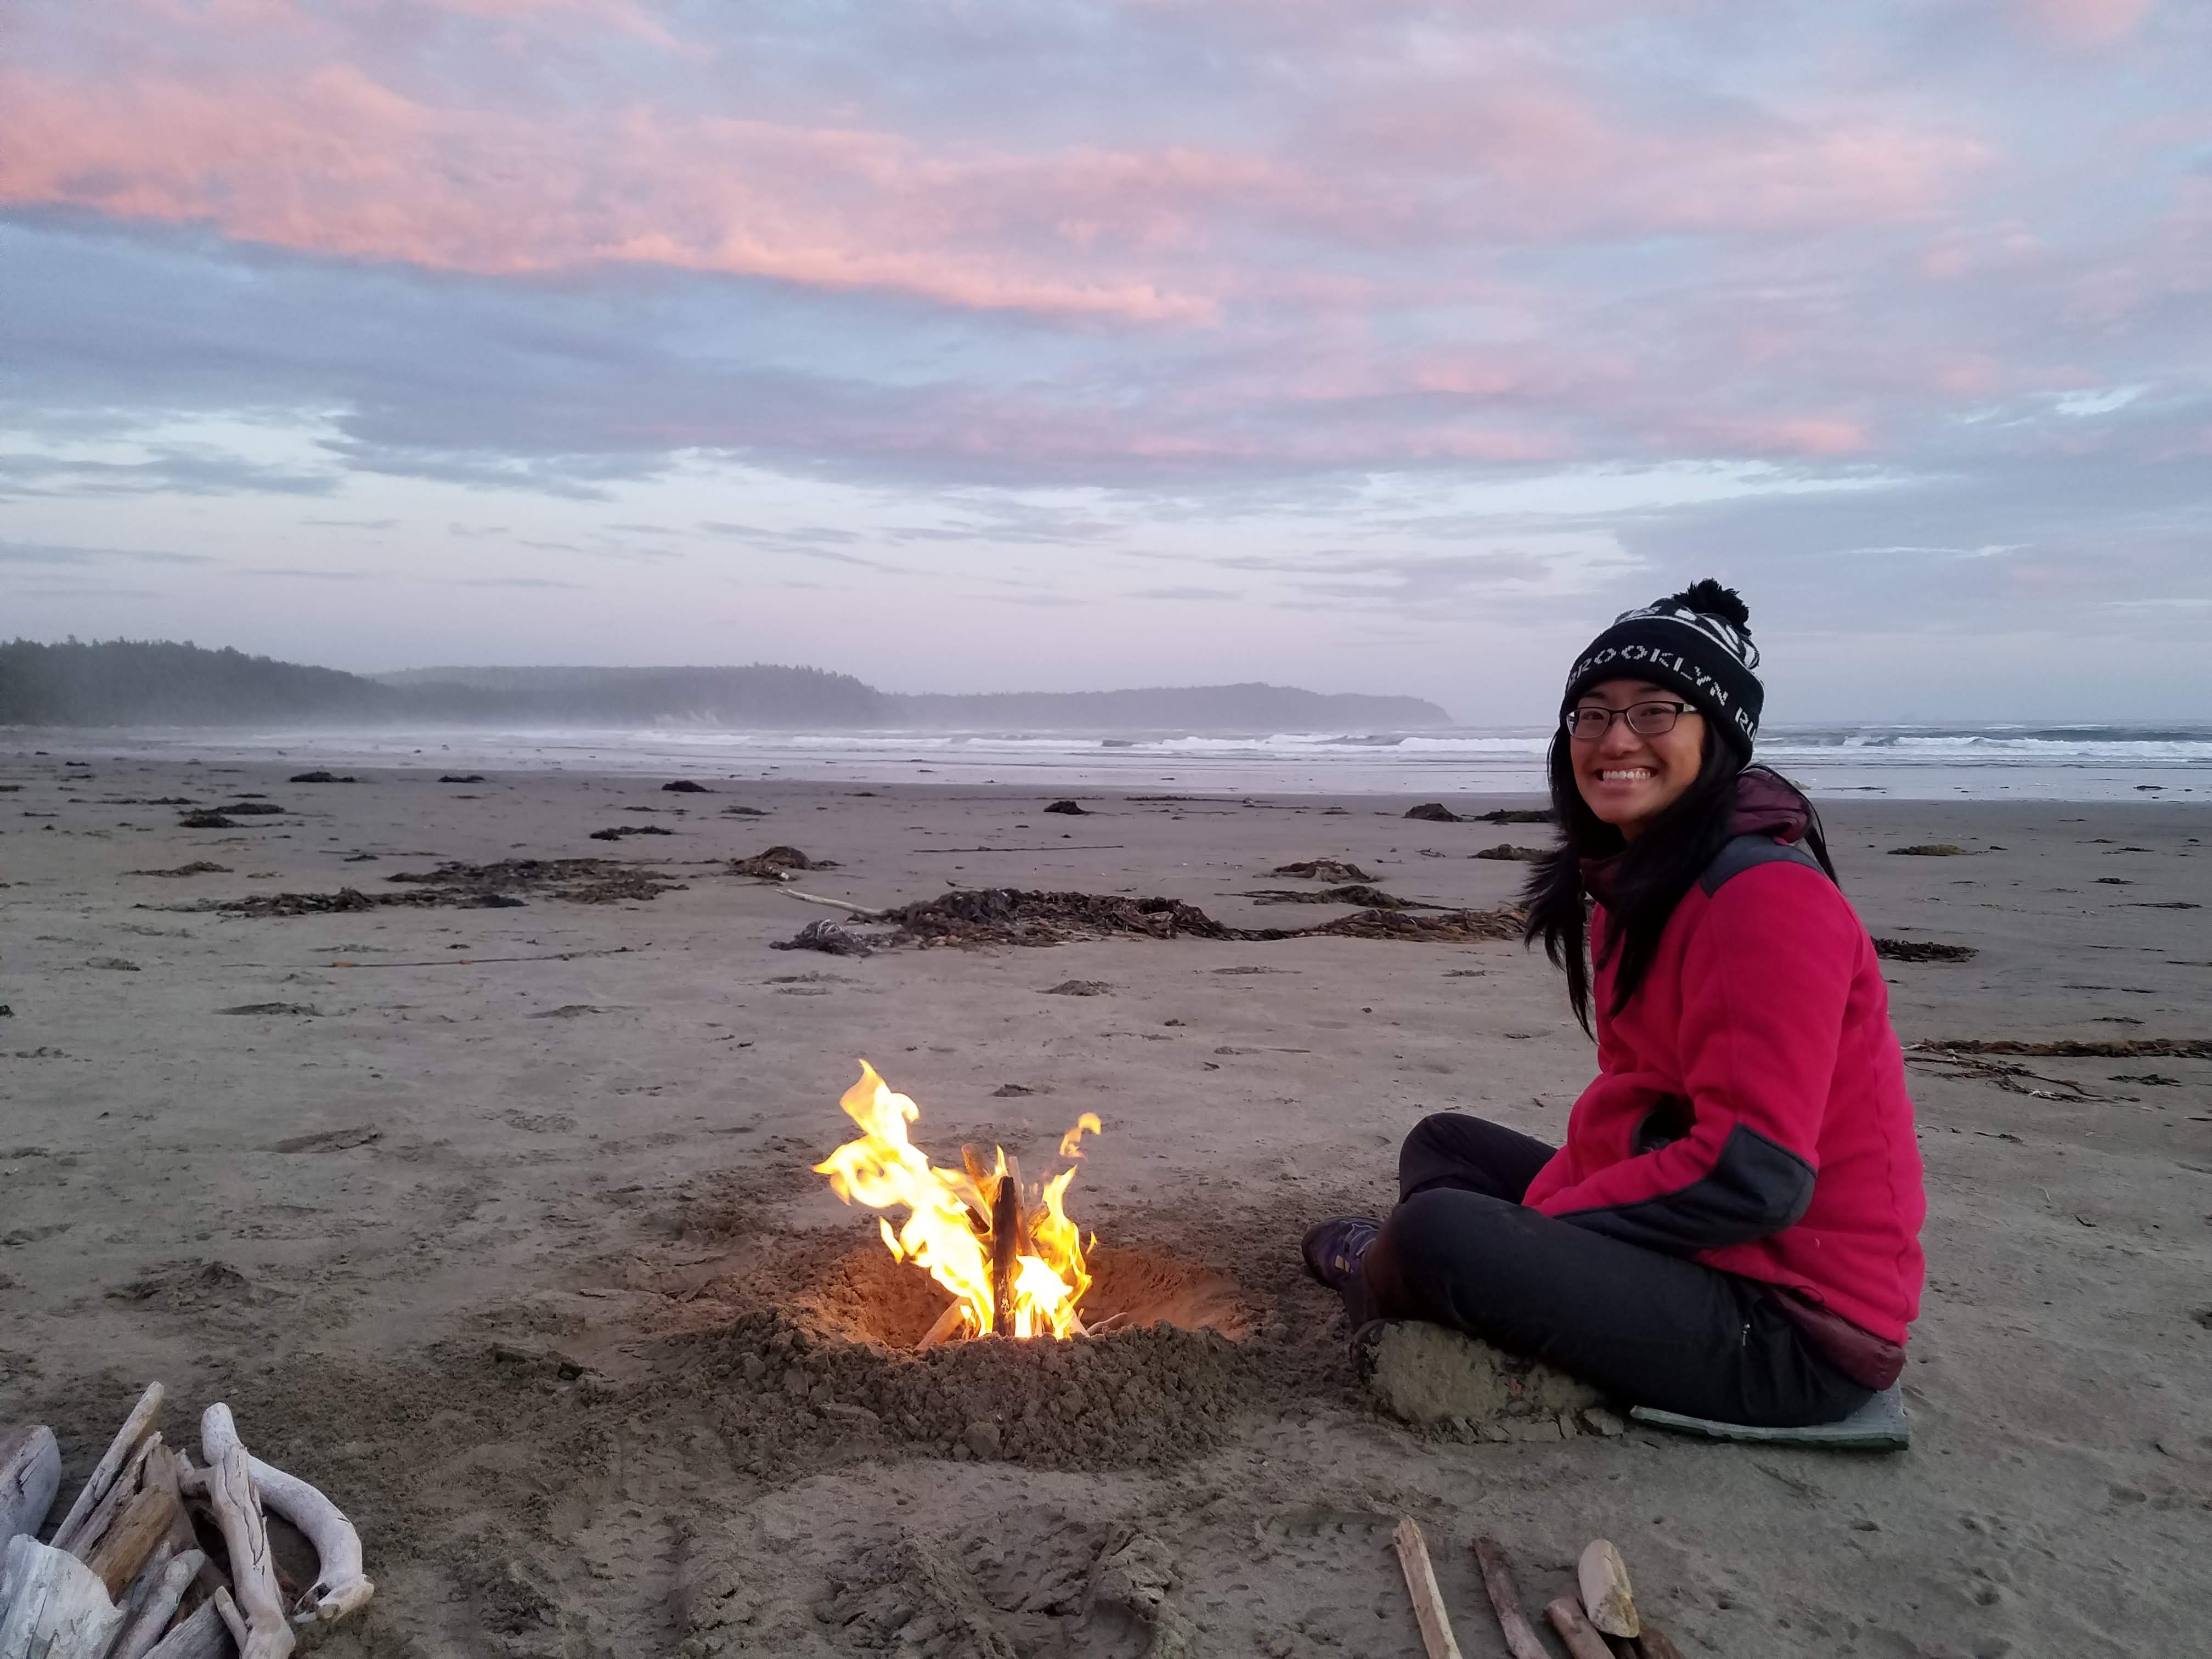 We burned driftwood for beach fires!